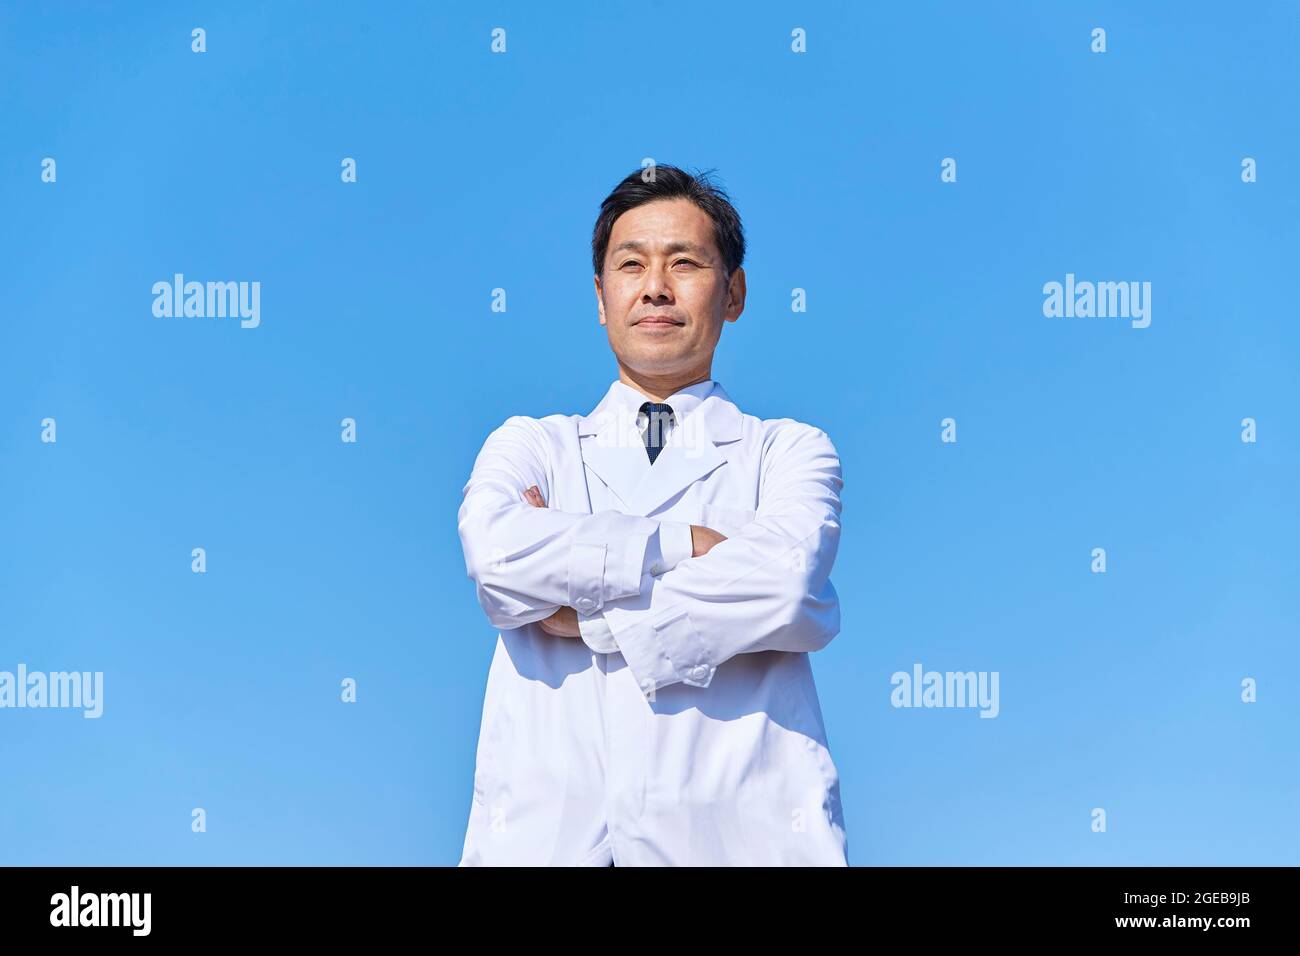 Japanese doctor outside Stock Photo